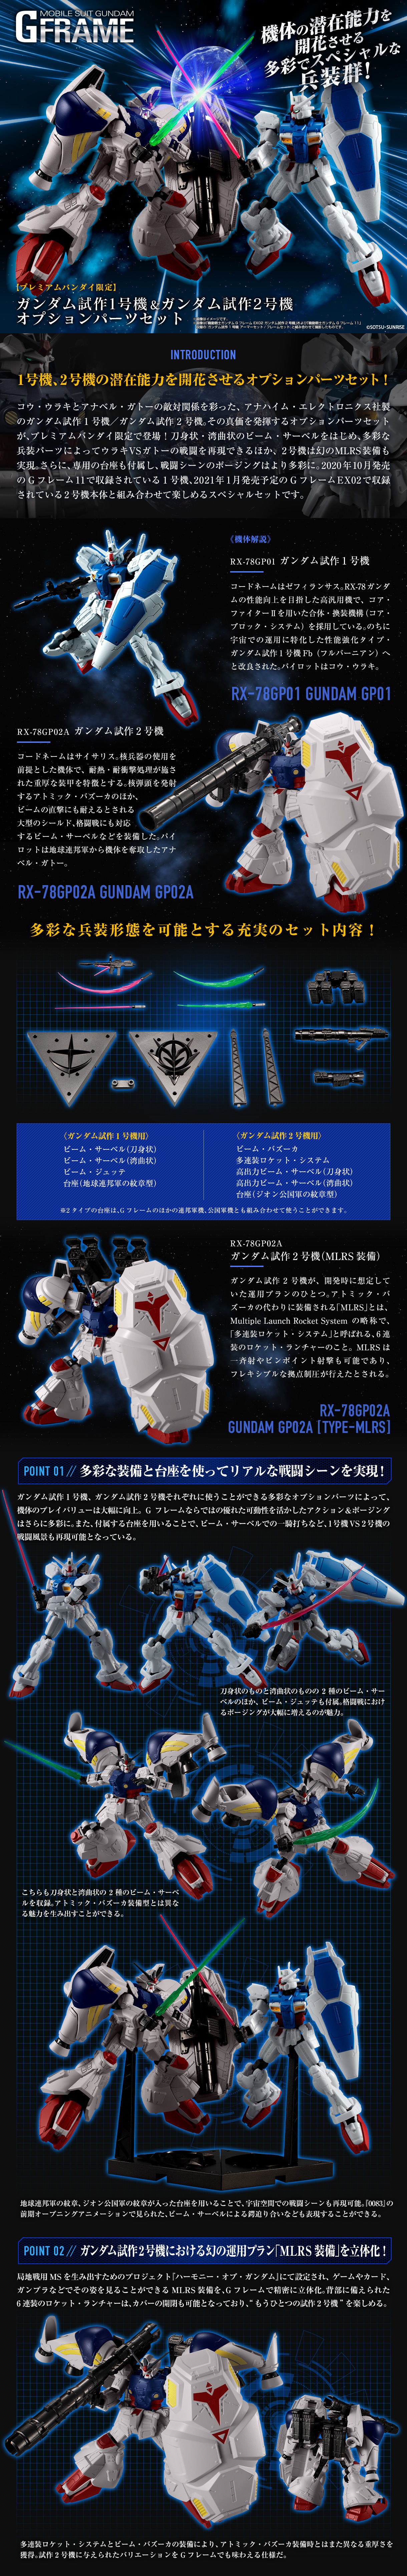 Mobile Suit Gundam G Frame Gundam Gp01 Gundam Gp02a Option Parts Set W O Gum Gundam Premium Bandai Singapore Online Store For Action Figures Model Kits Toys And More